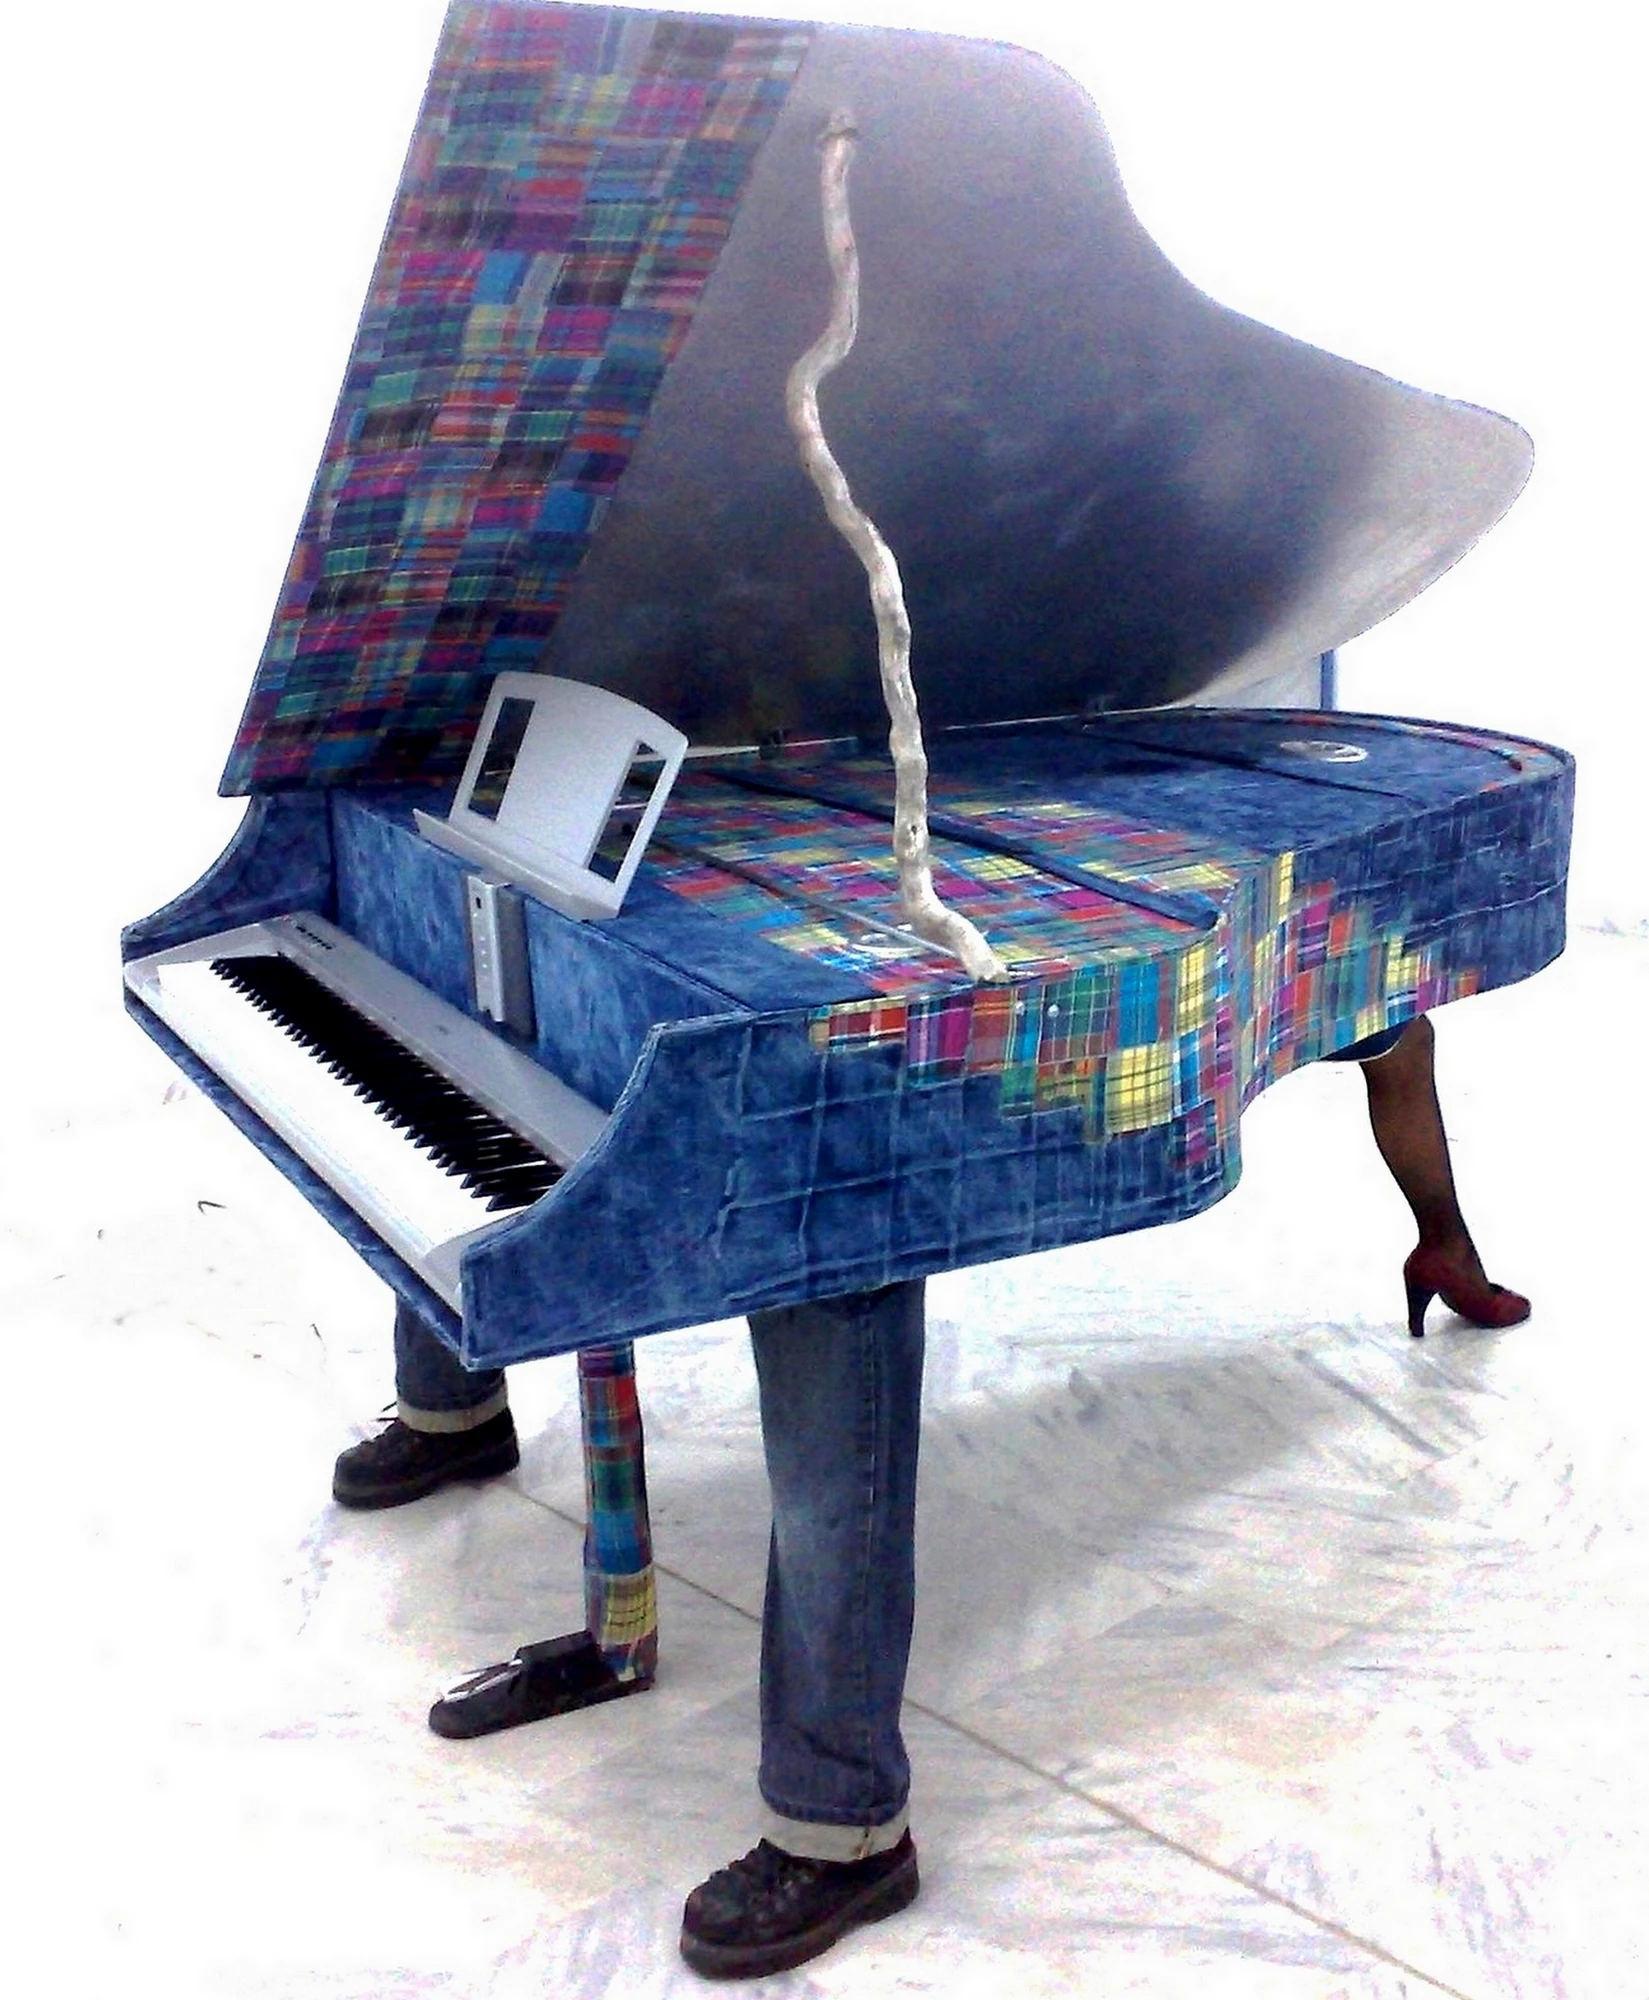 Eco friendly  "Wallking piano"